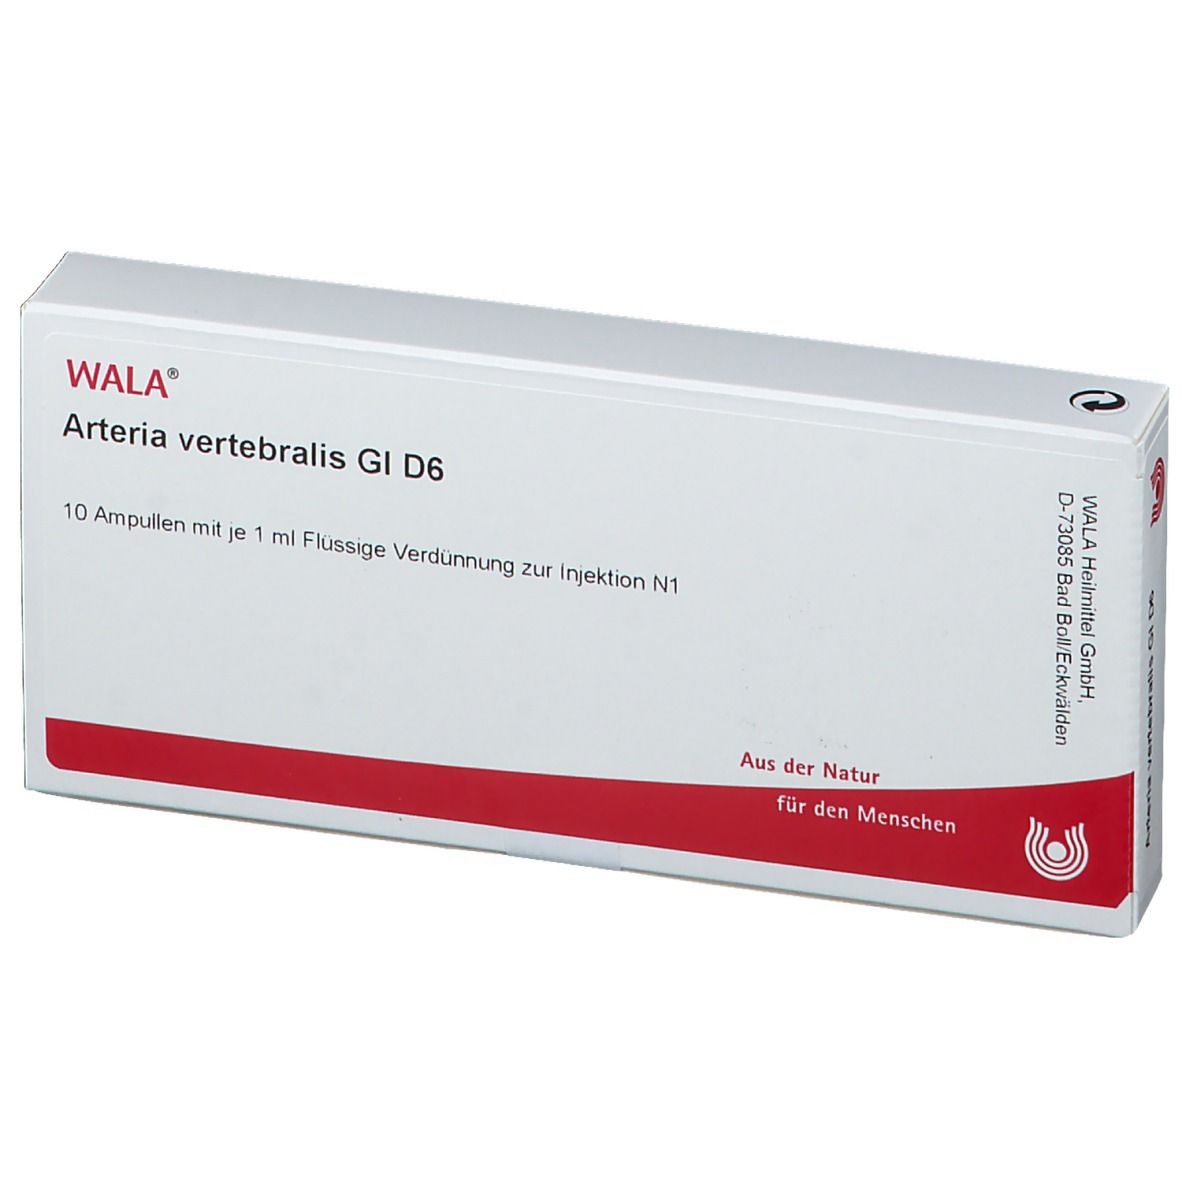 WALA® Arteria vertebralis Gl D 6